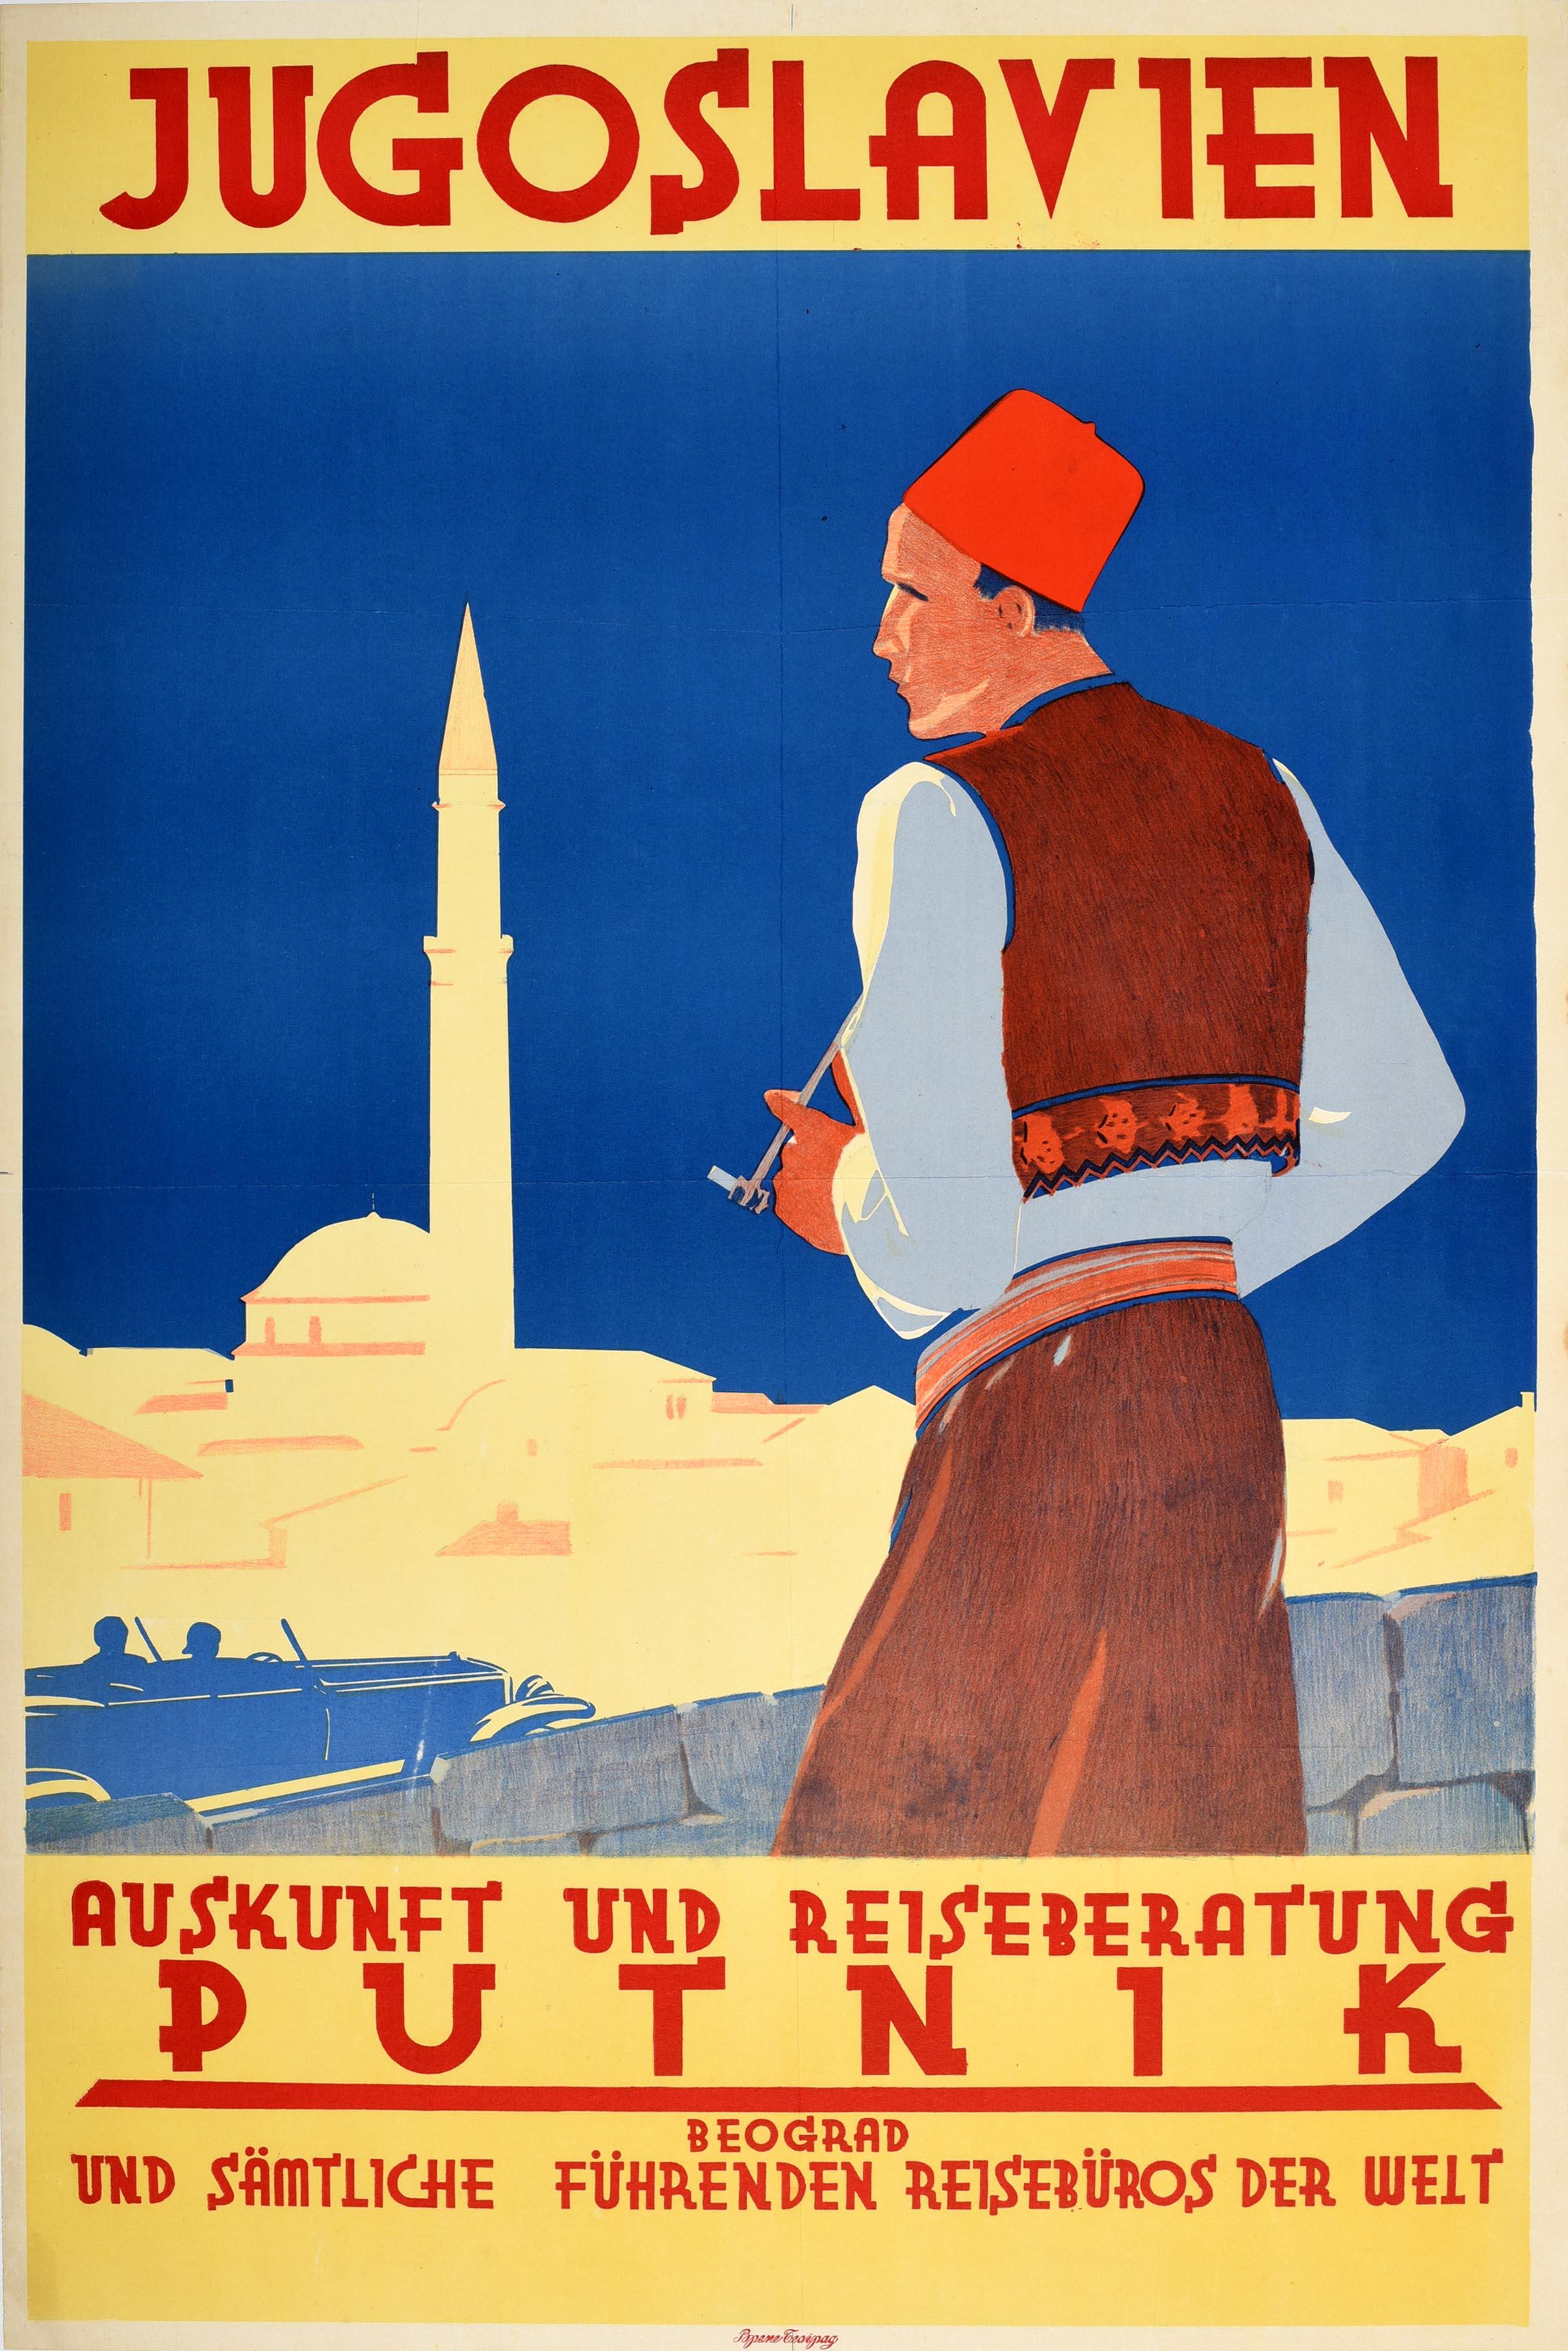 Unknown Print - Original Vintage Travel Poster Advertising Putnik Yugoslavia Belgrade Art Deco